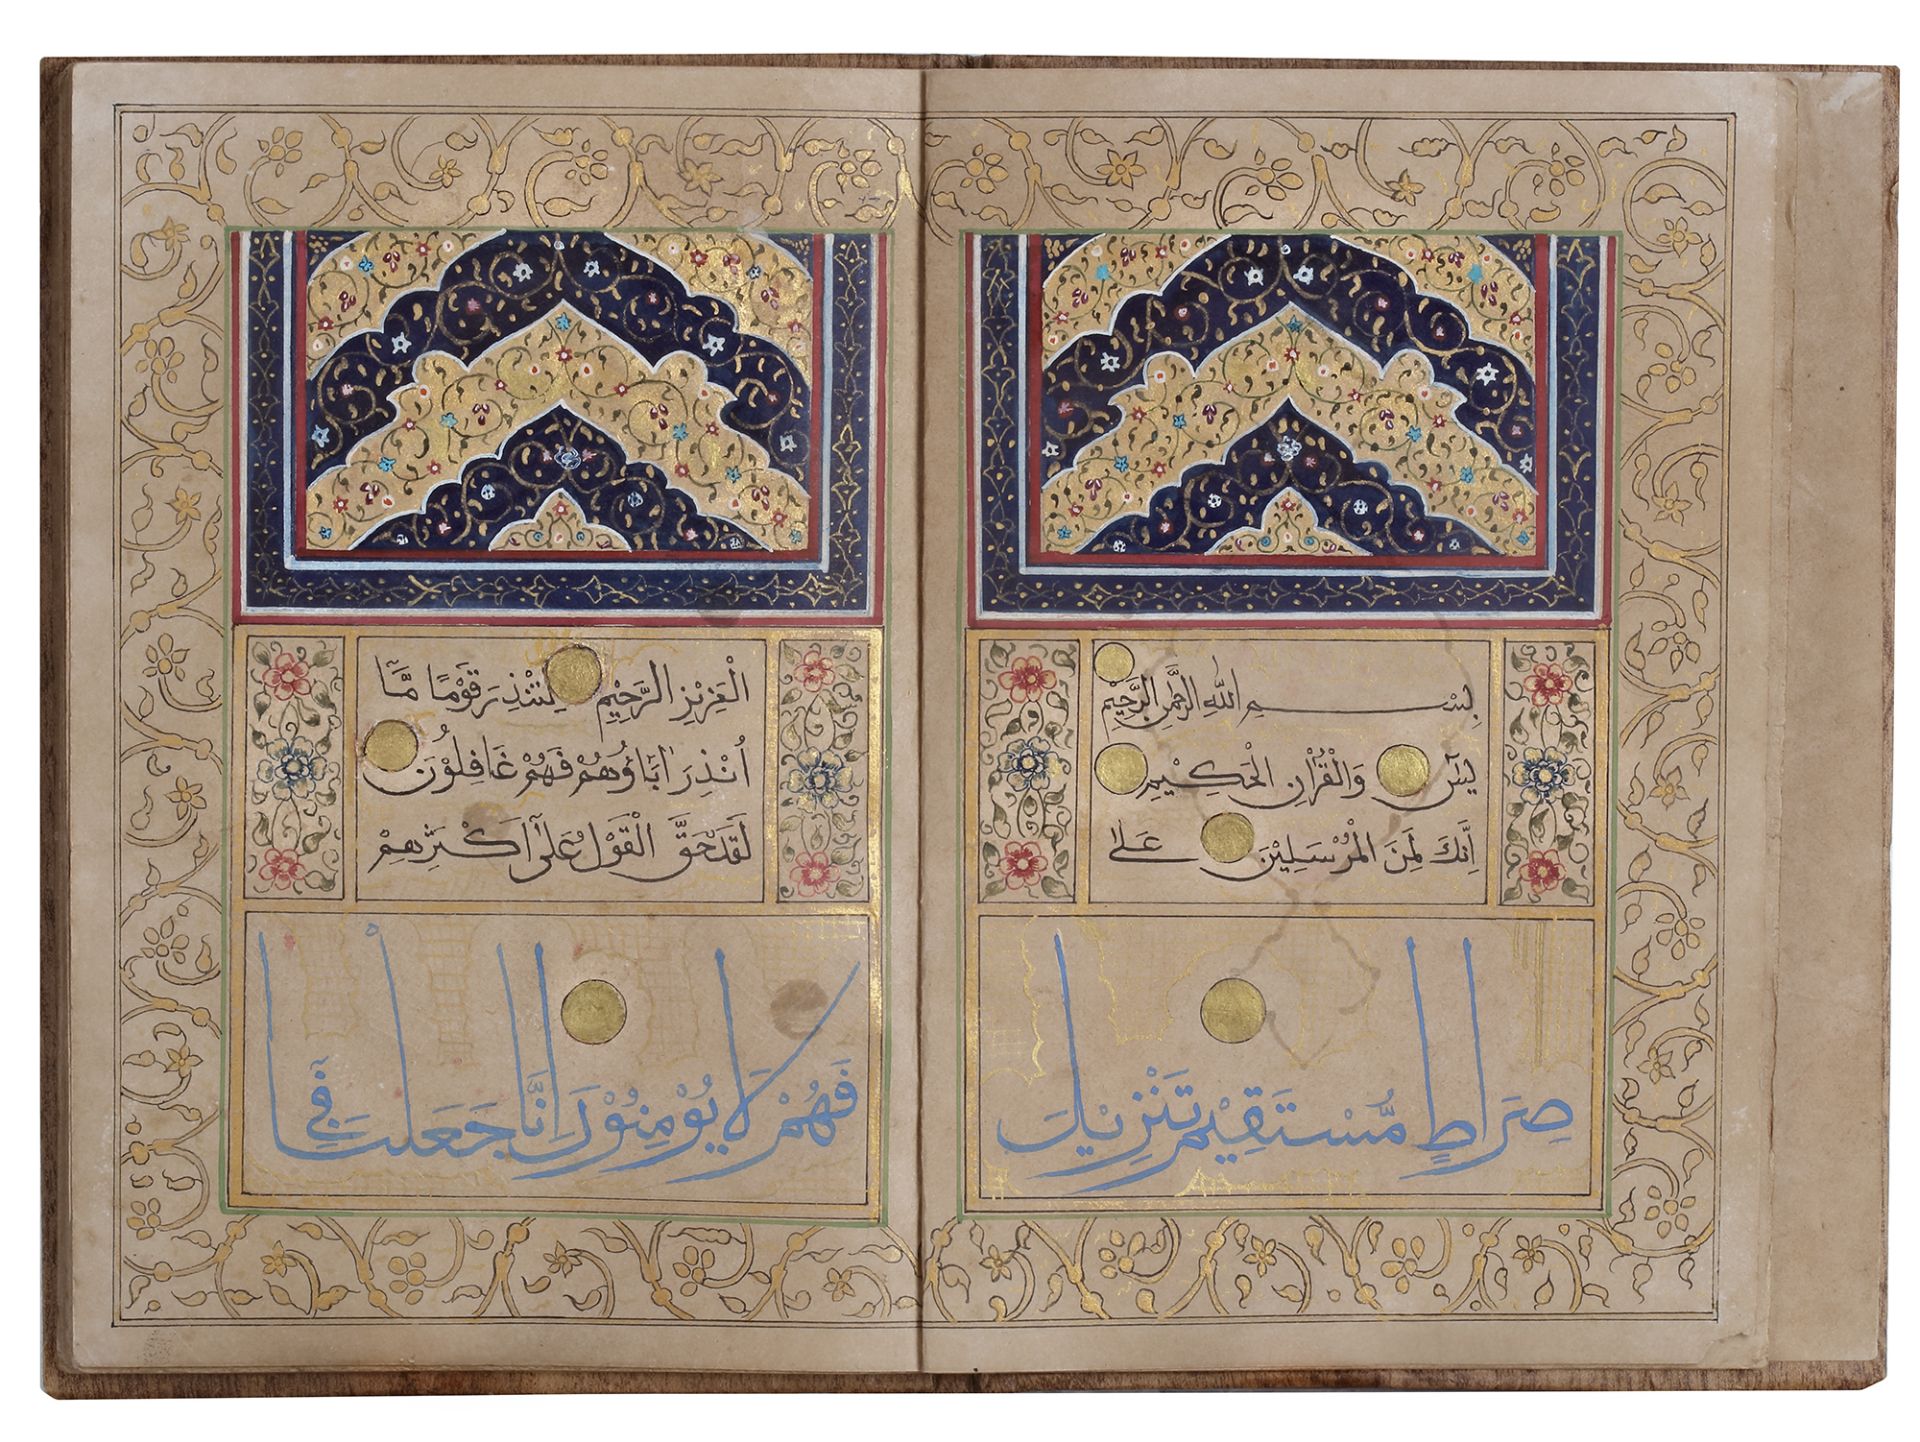 A QURAN SECTION WRITTEN BY MEHMET SELIM VASFI, OTTOMAN TURKEY, DATED 1303 AH/1885 AD